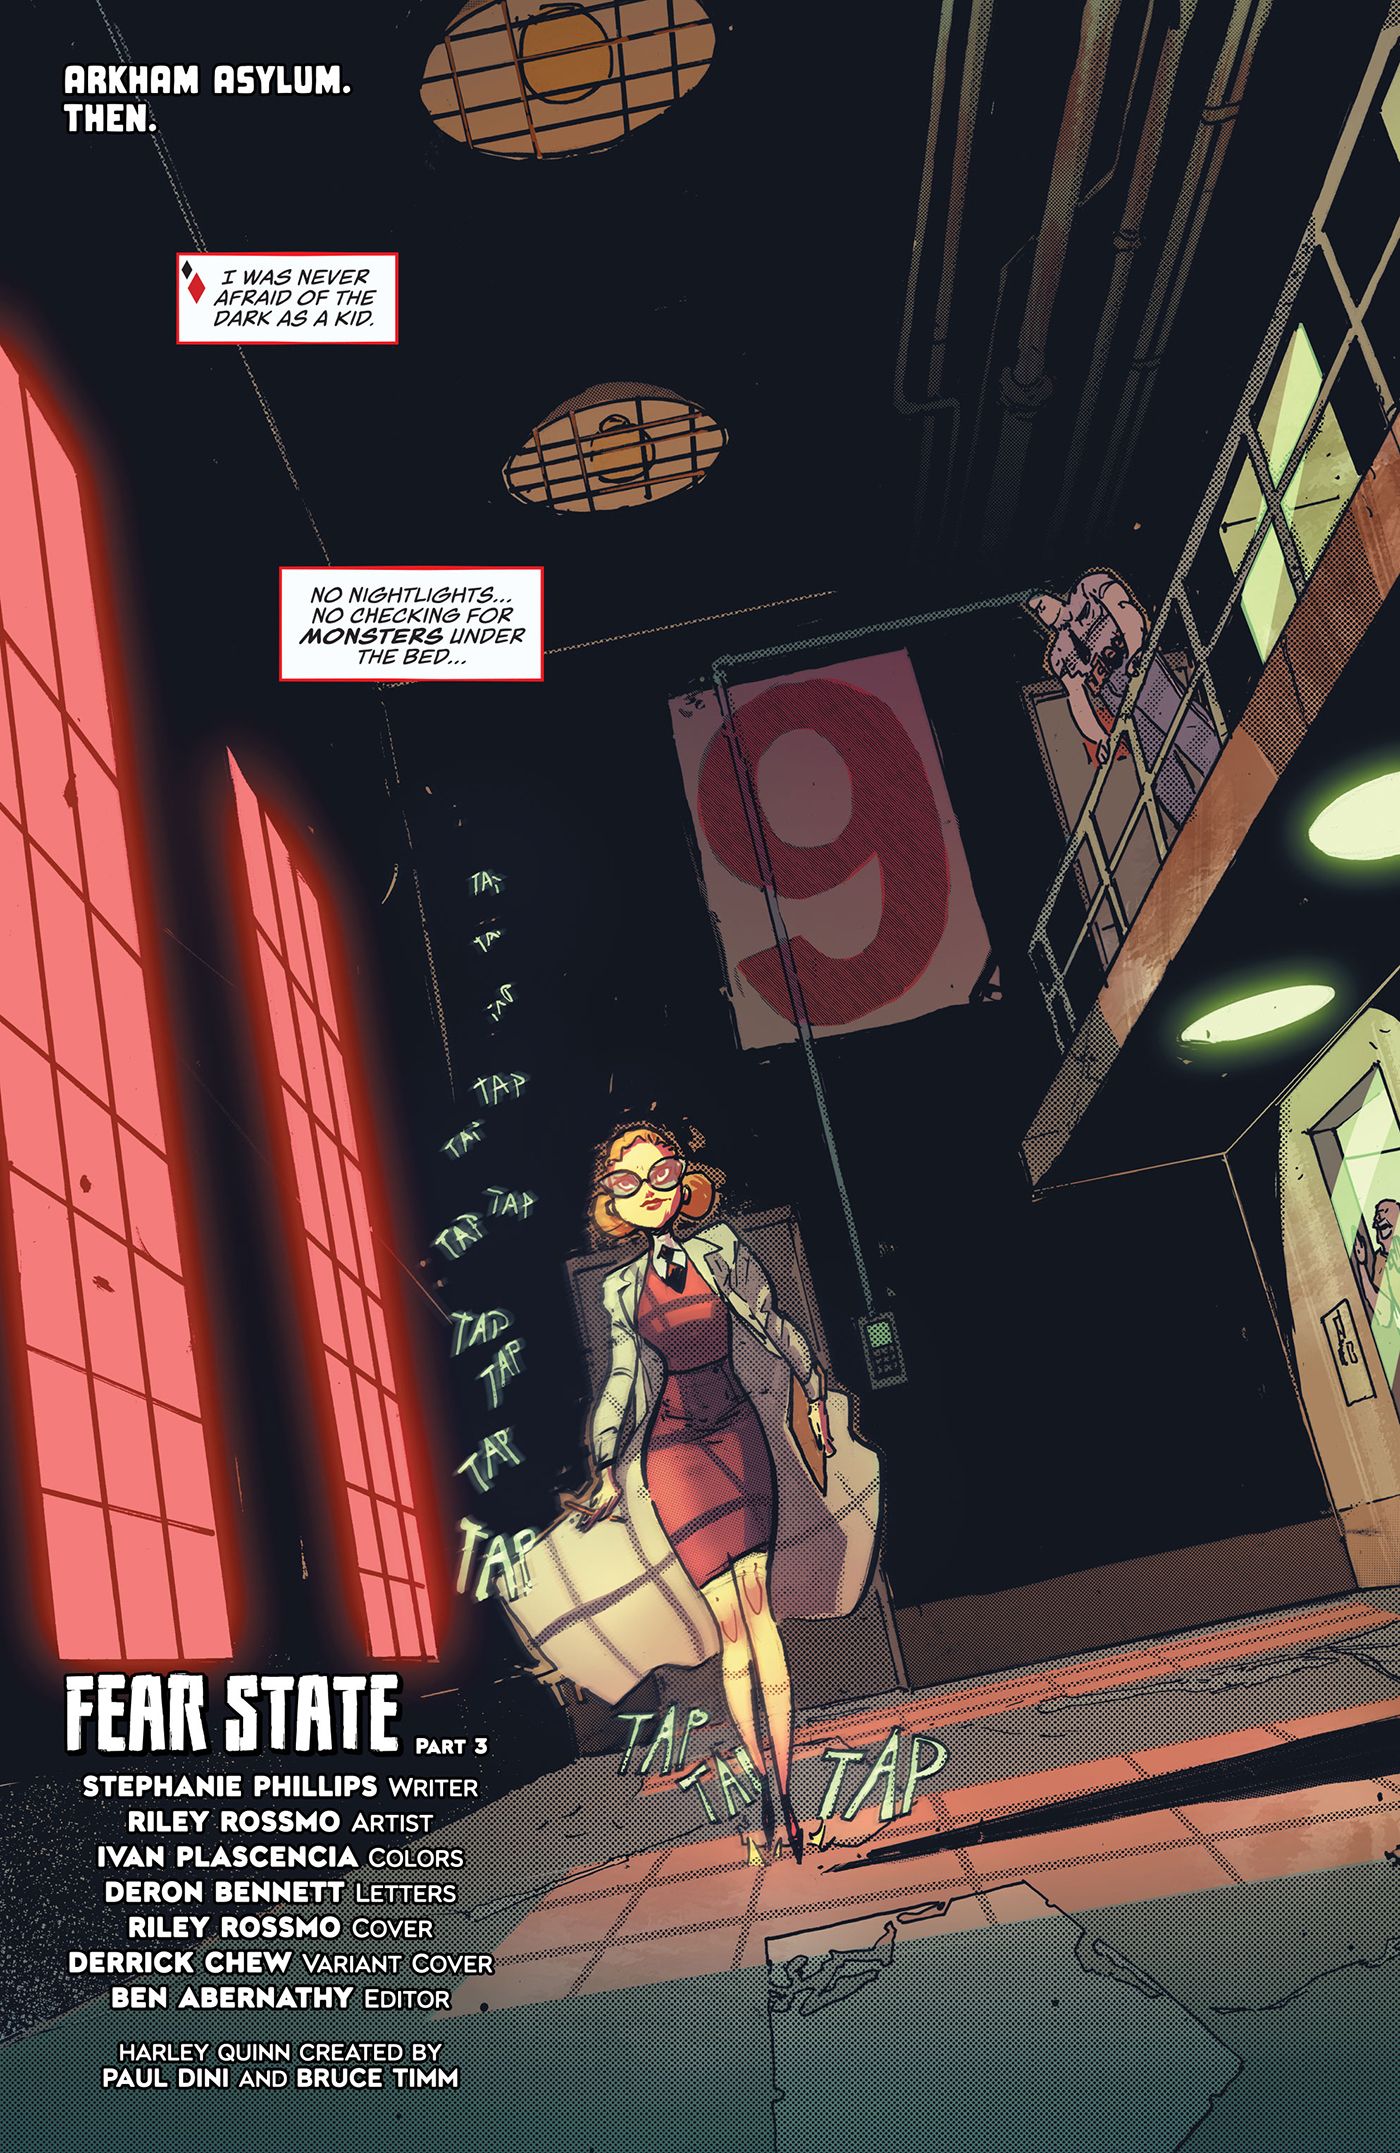 Harleen Quinzel walks through the halls of Arkham Asylum. 